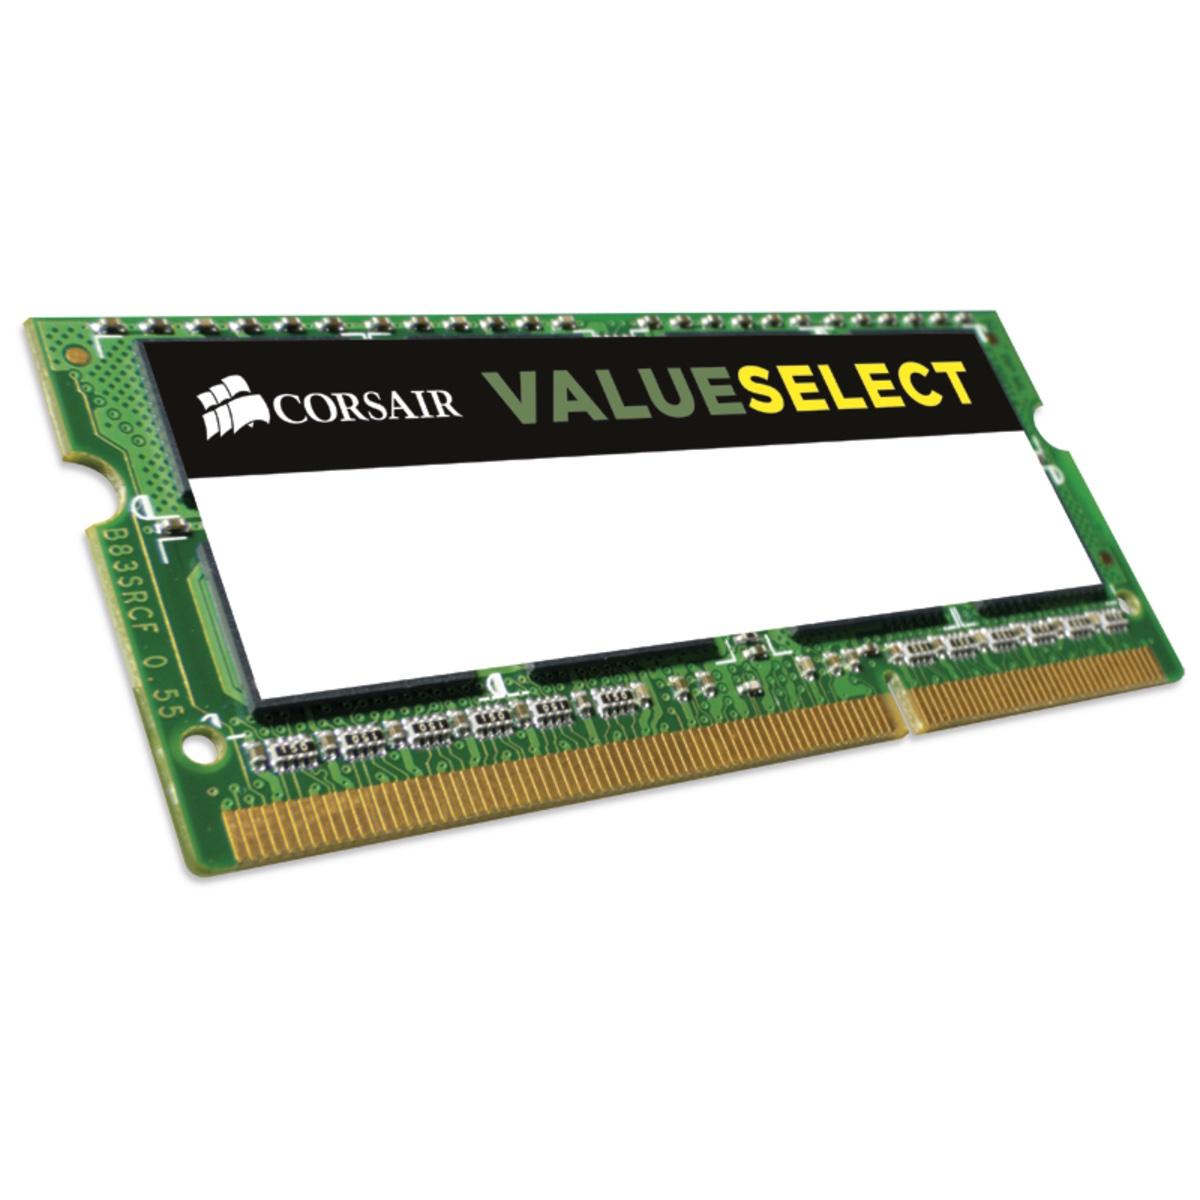 Памет Corsair DDR3L SODIMM 1600 8GB C11 1x8GB, 1.35V, Value Select, CMSO8GX3M1C1600C11-1